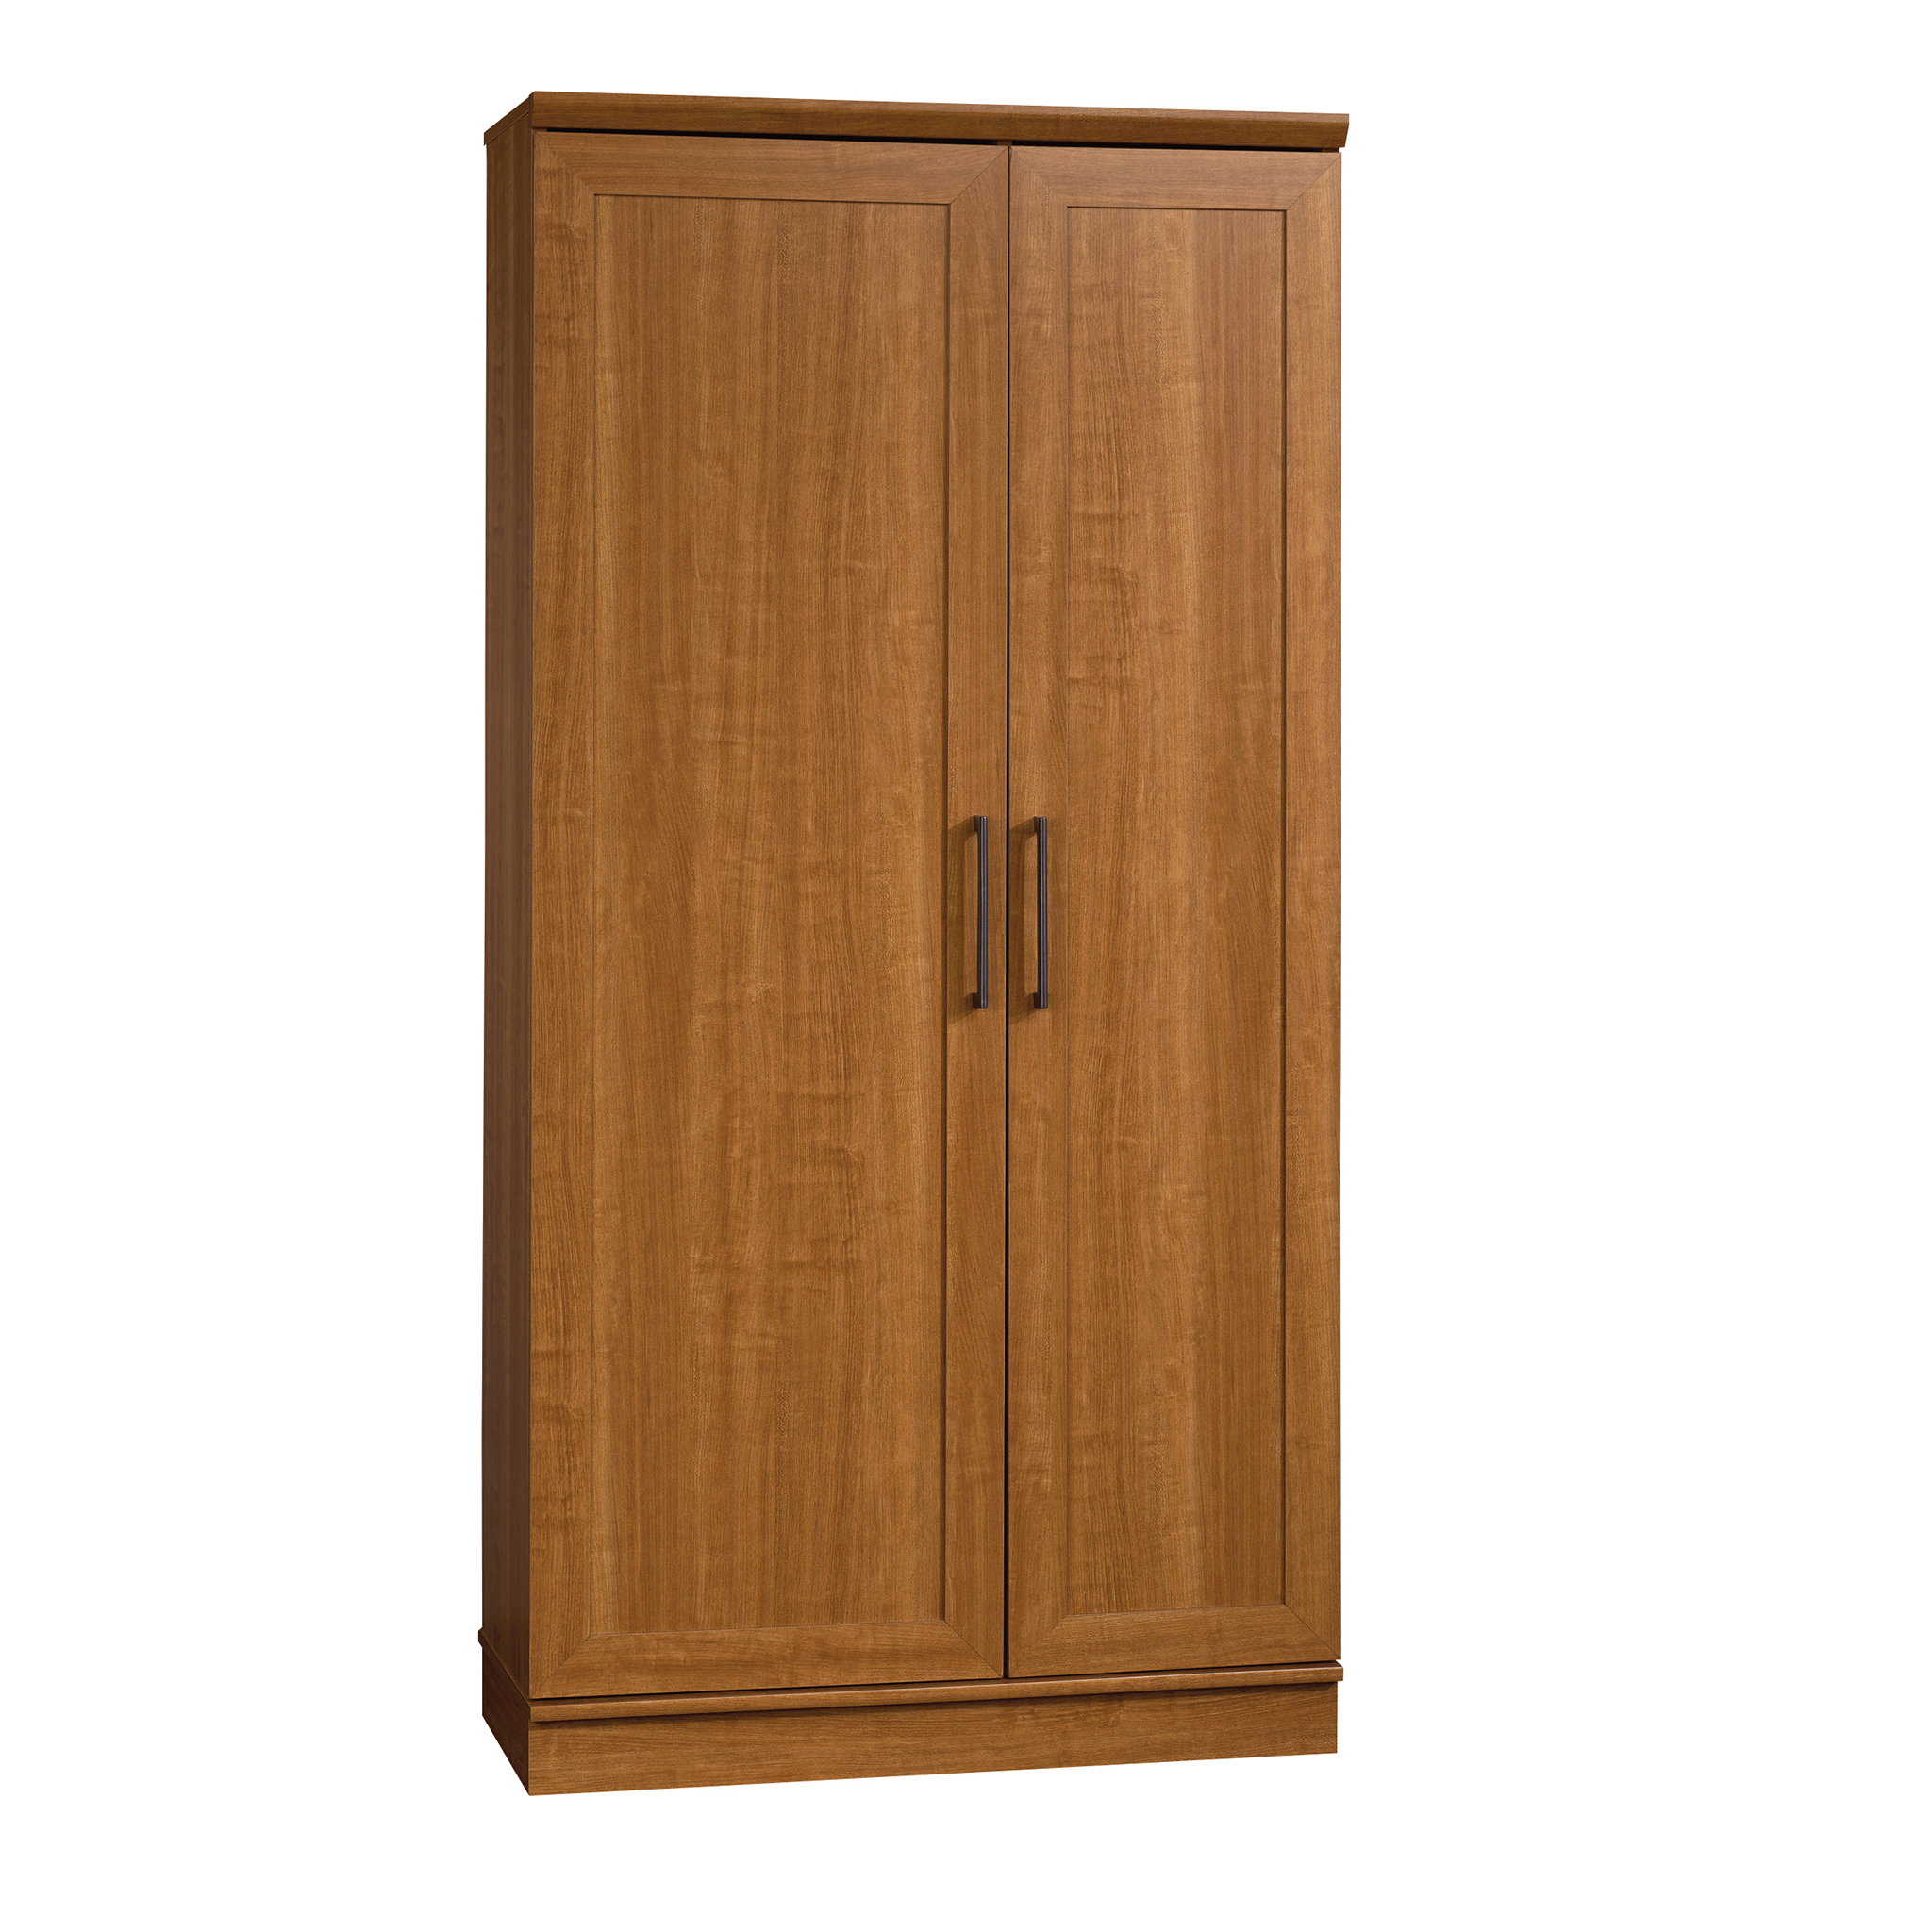 Sauder HomePlus 71" Tall 2-Door Multiple Shelf Wood Storage Cabinet, Sienna Oak Finish - image 1 of 9